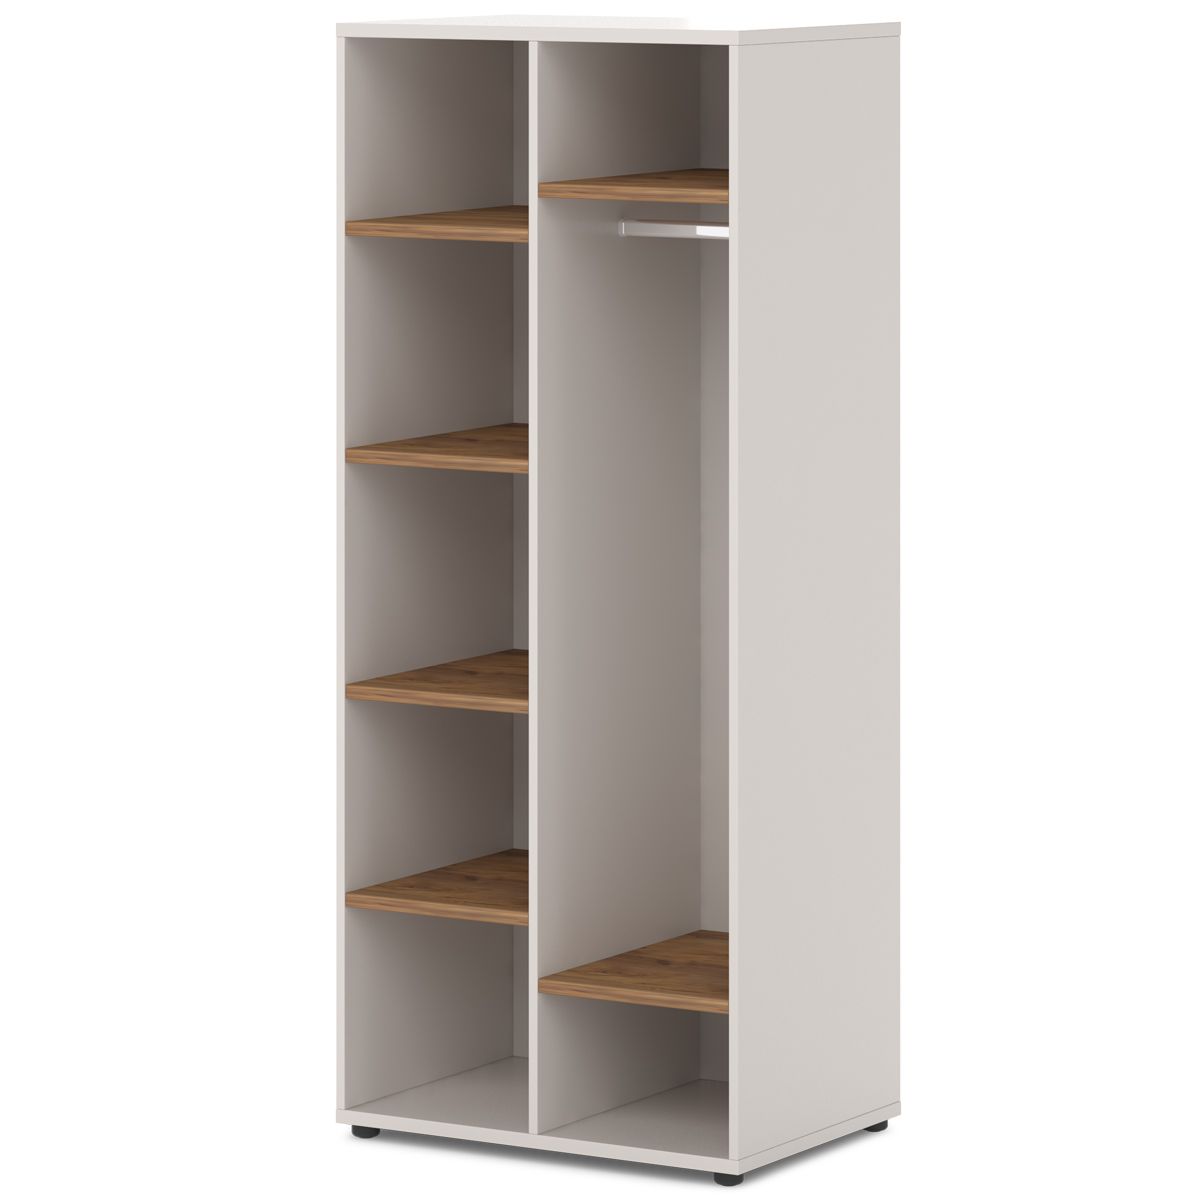 Каркас шкафа ЛДСП, ,6 х 50 х 58 см, белый купите по низкой цене в интернет-магазине Castorama